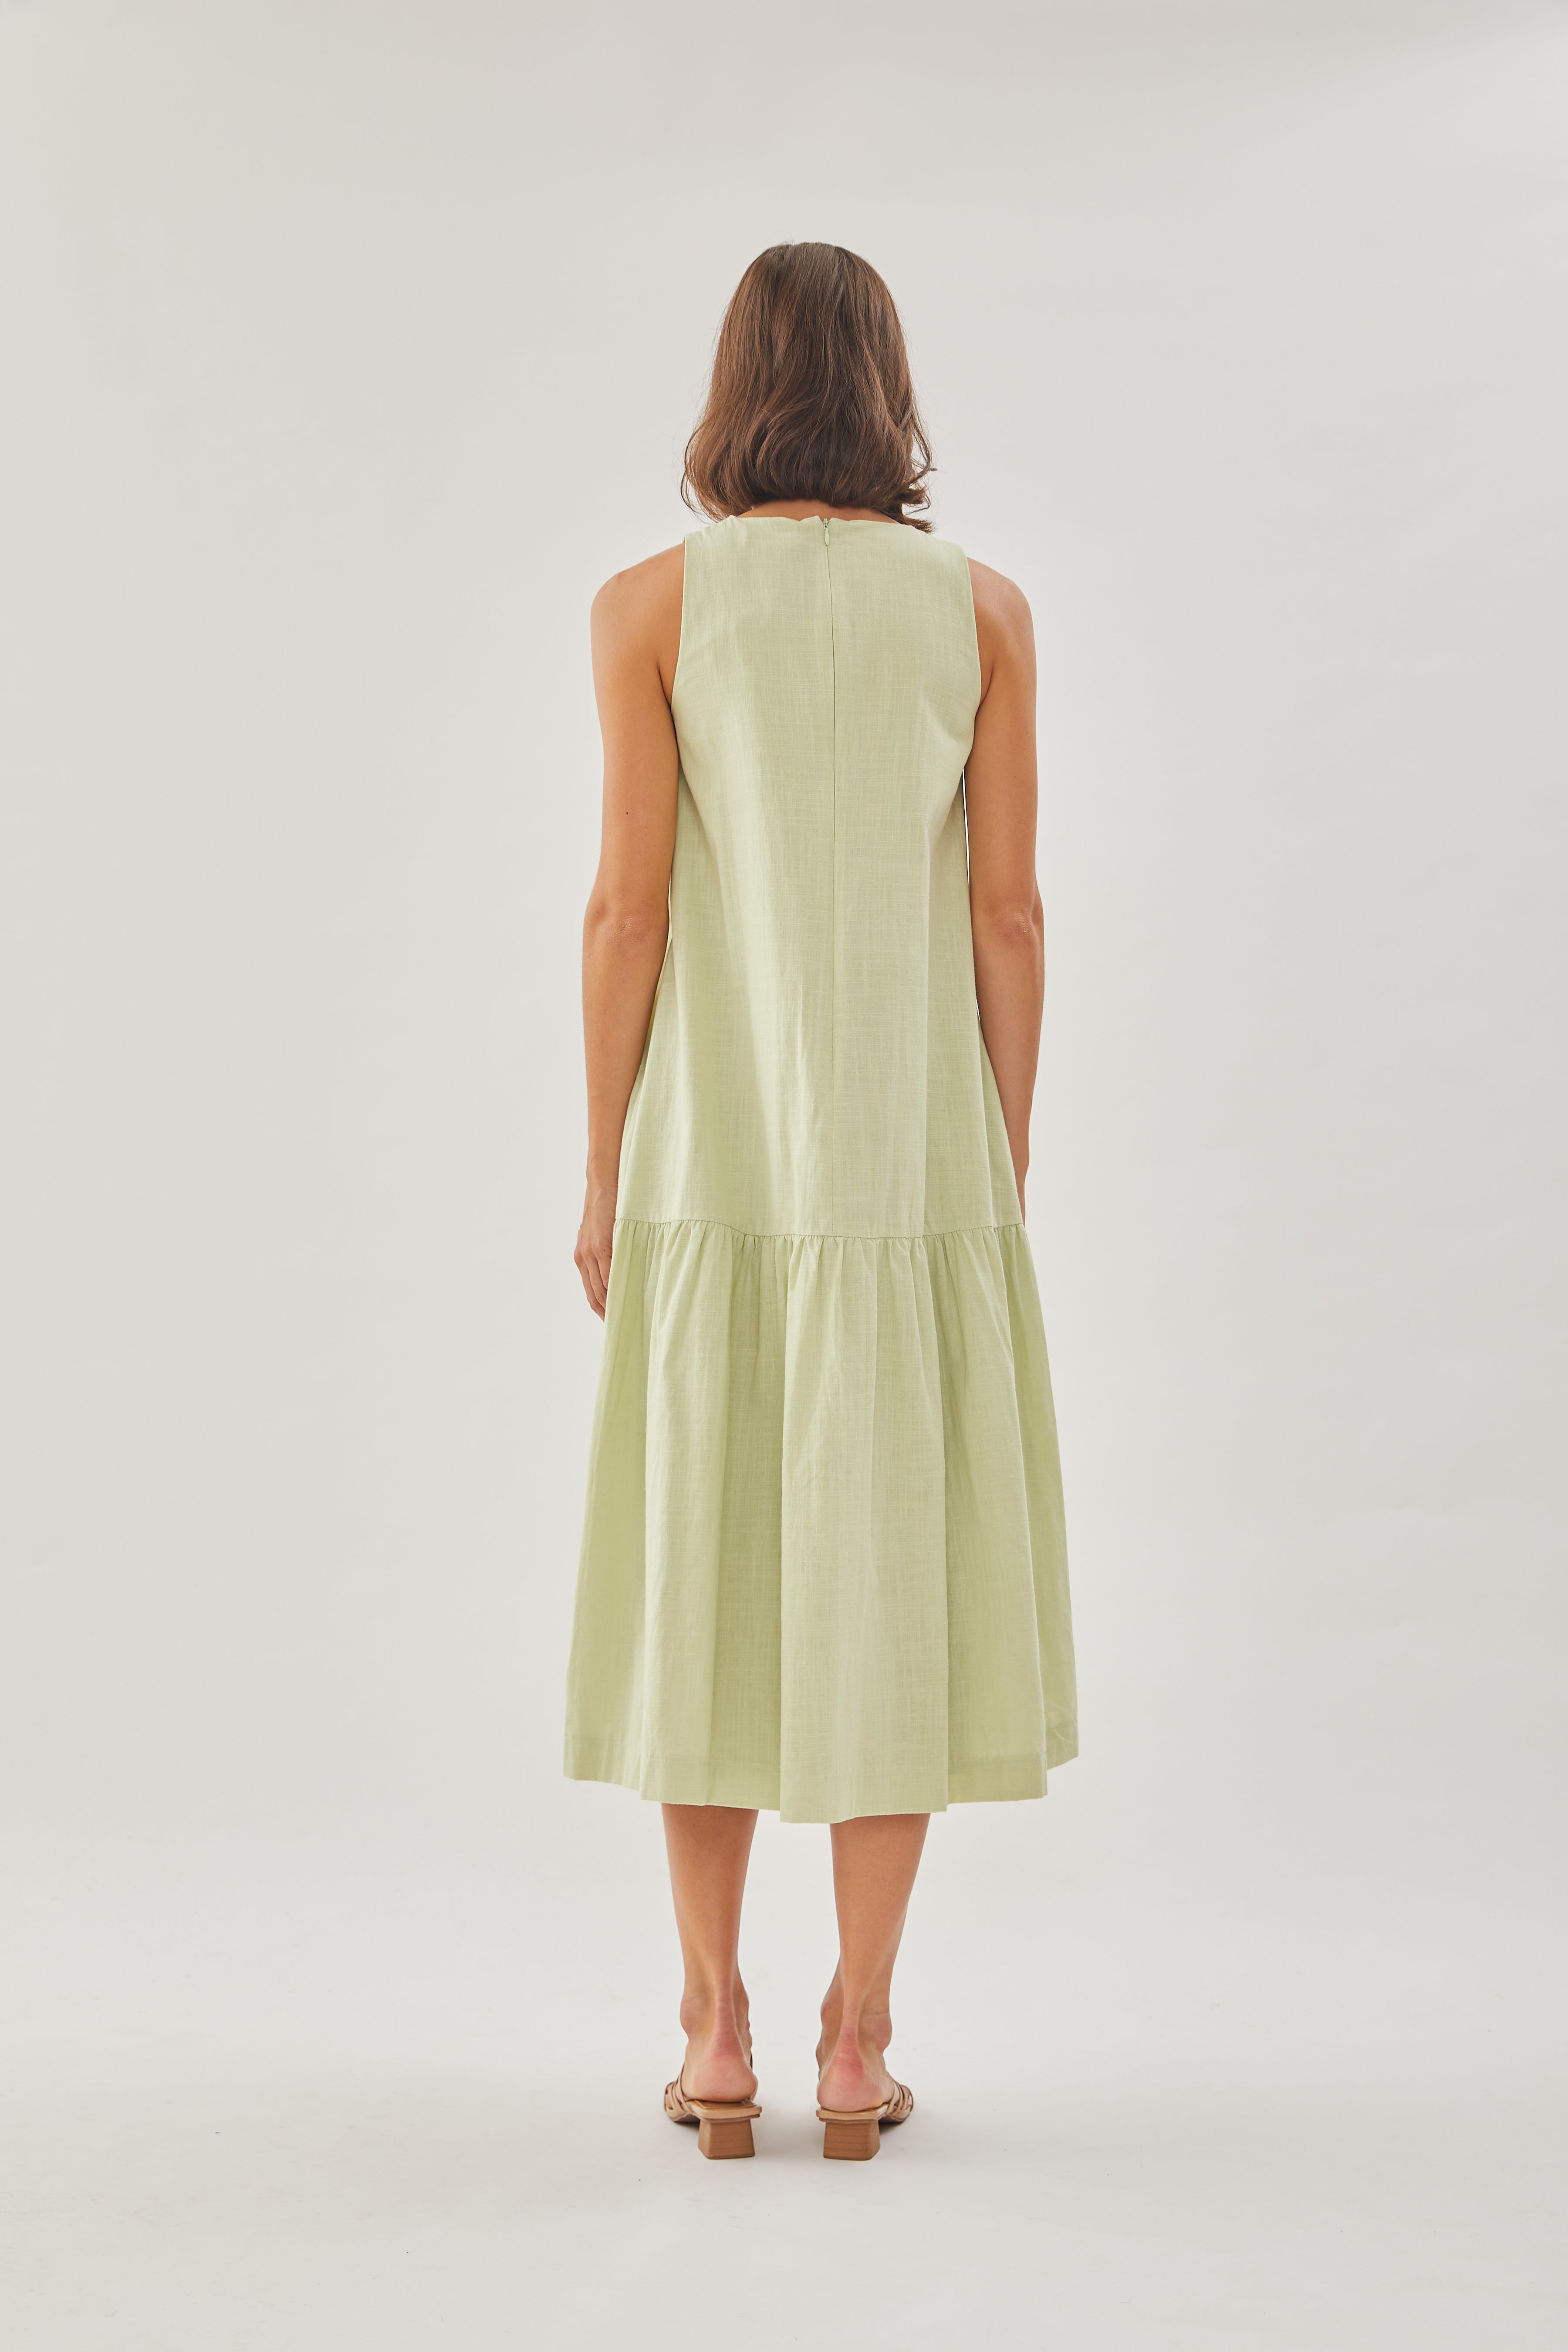 Linen Tiered Dress in Soft Green